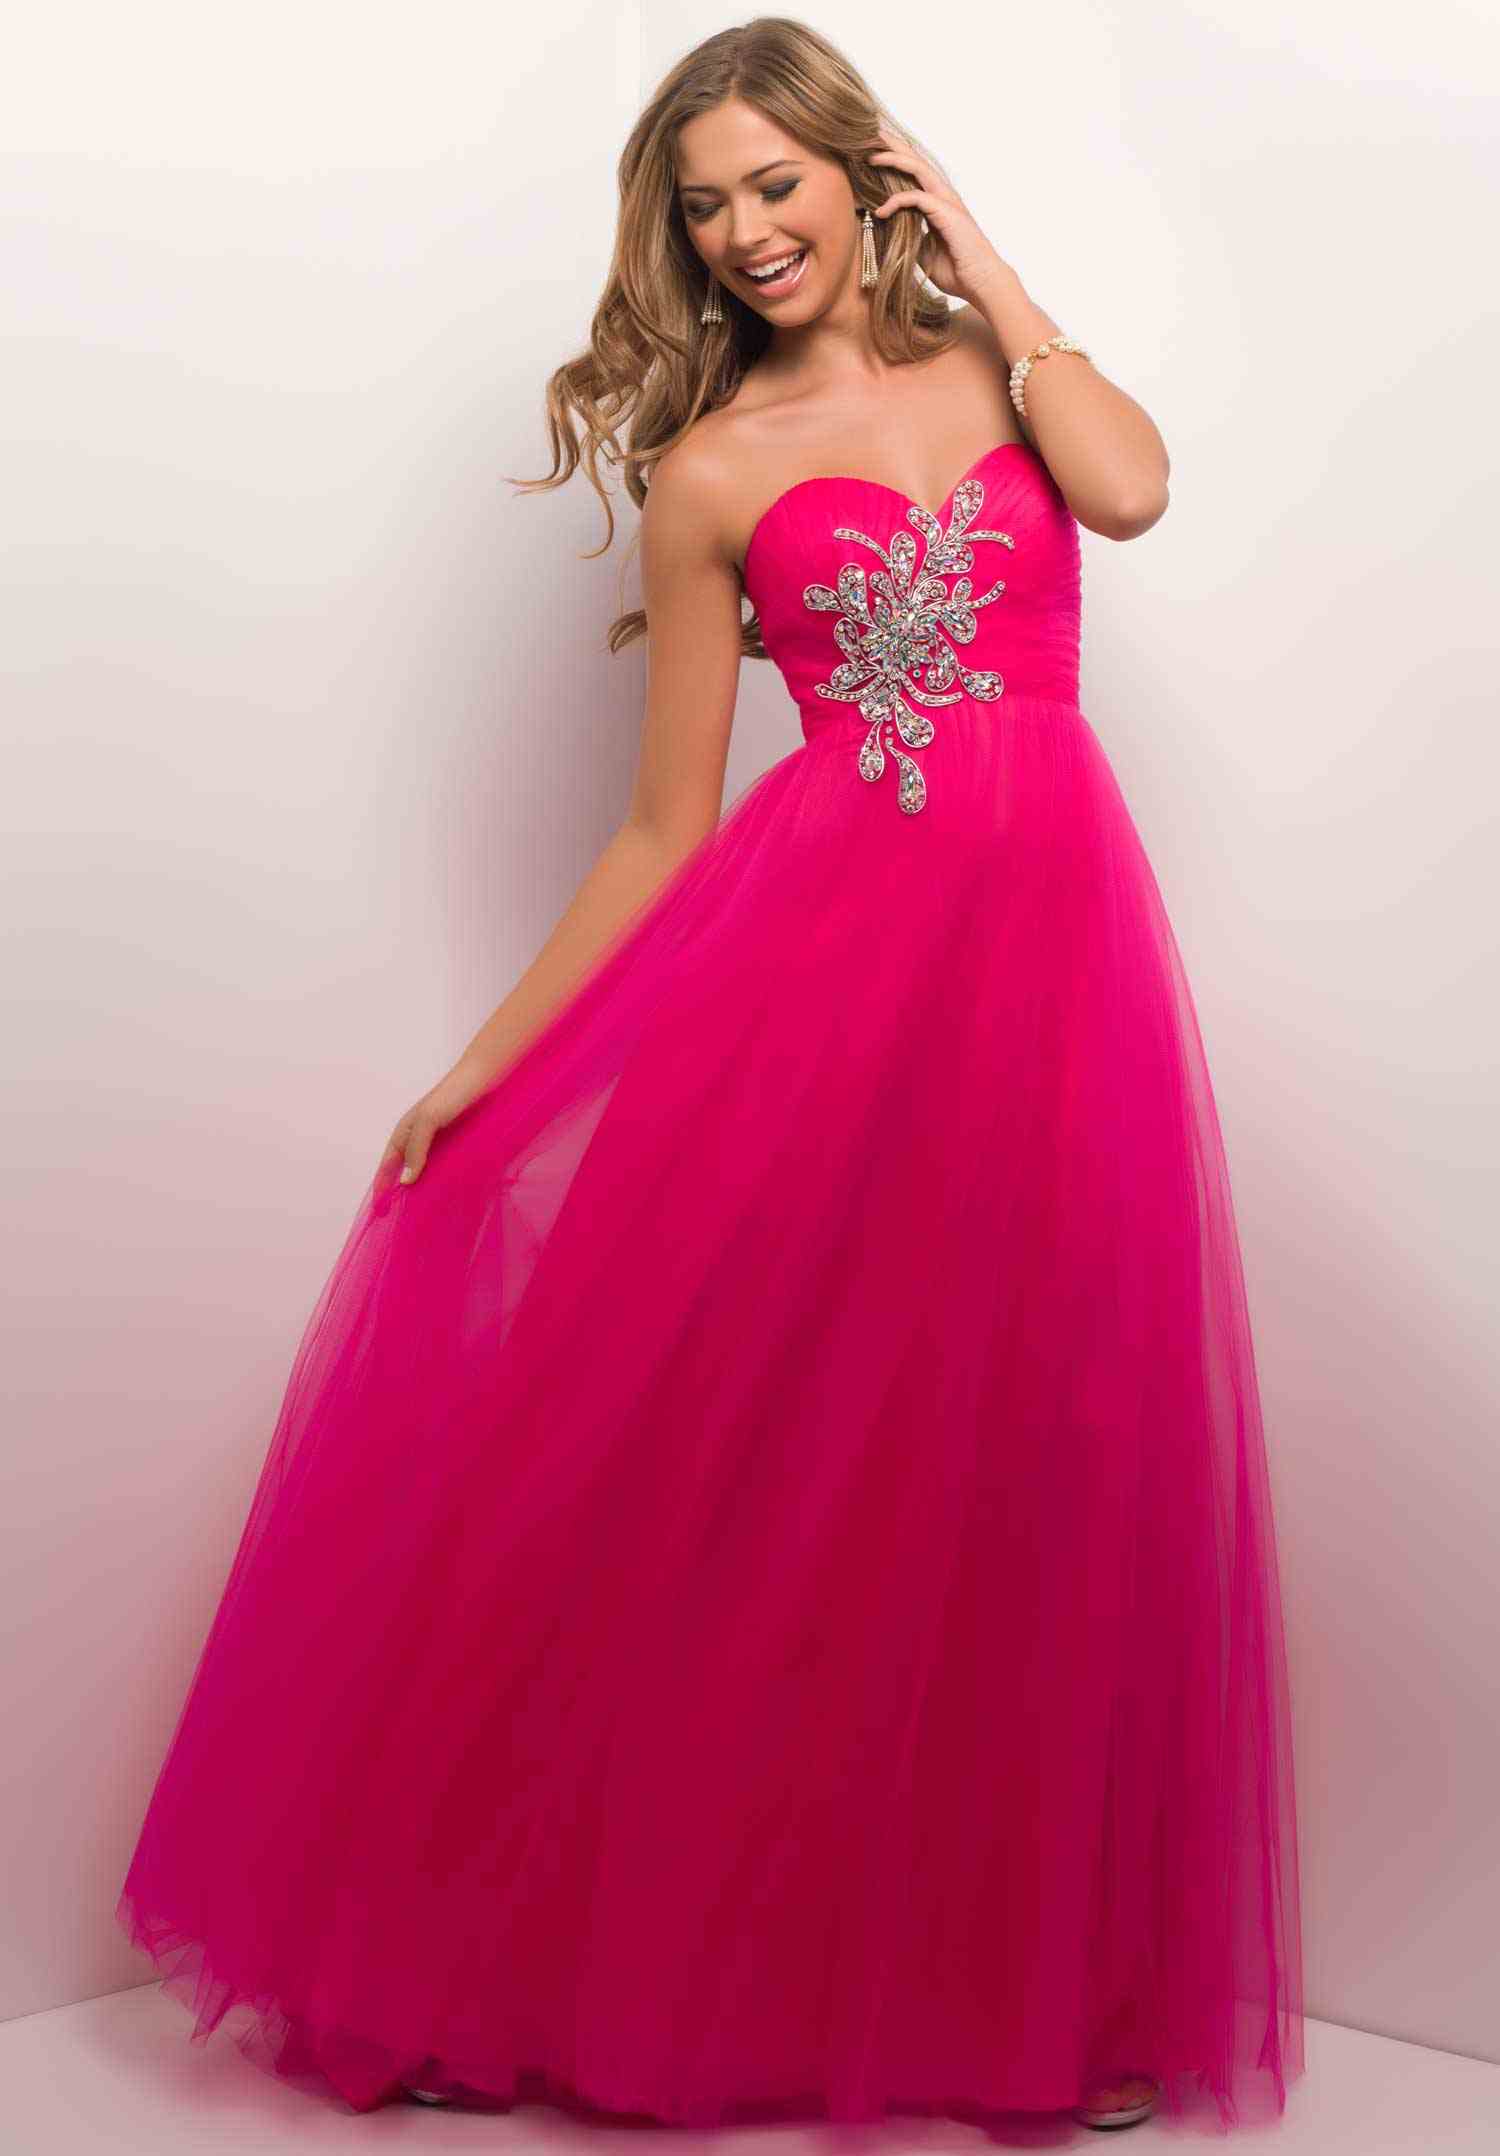 Prom Dresses Hot Pink And Black - Formal Dresses